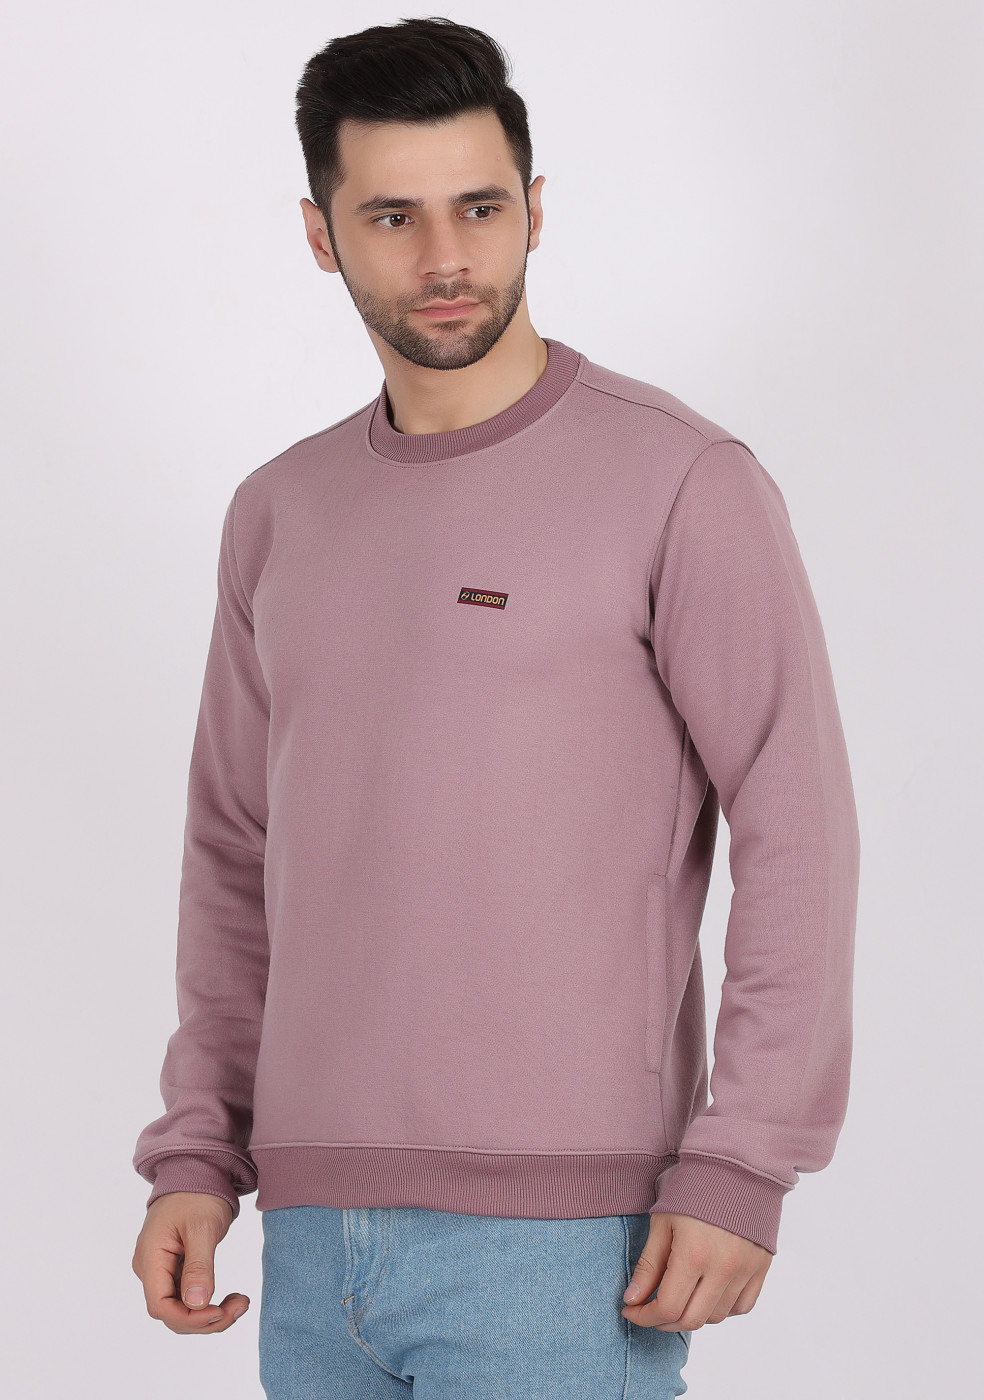 HUKH Onion Color Sweatshirt For Men